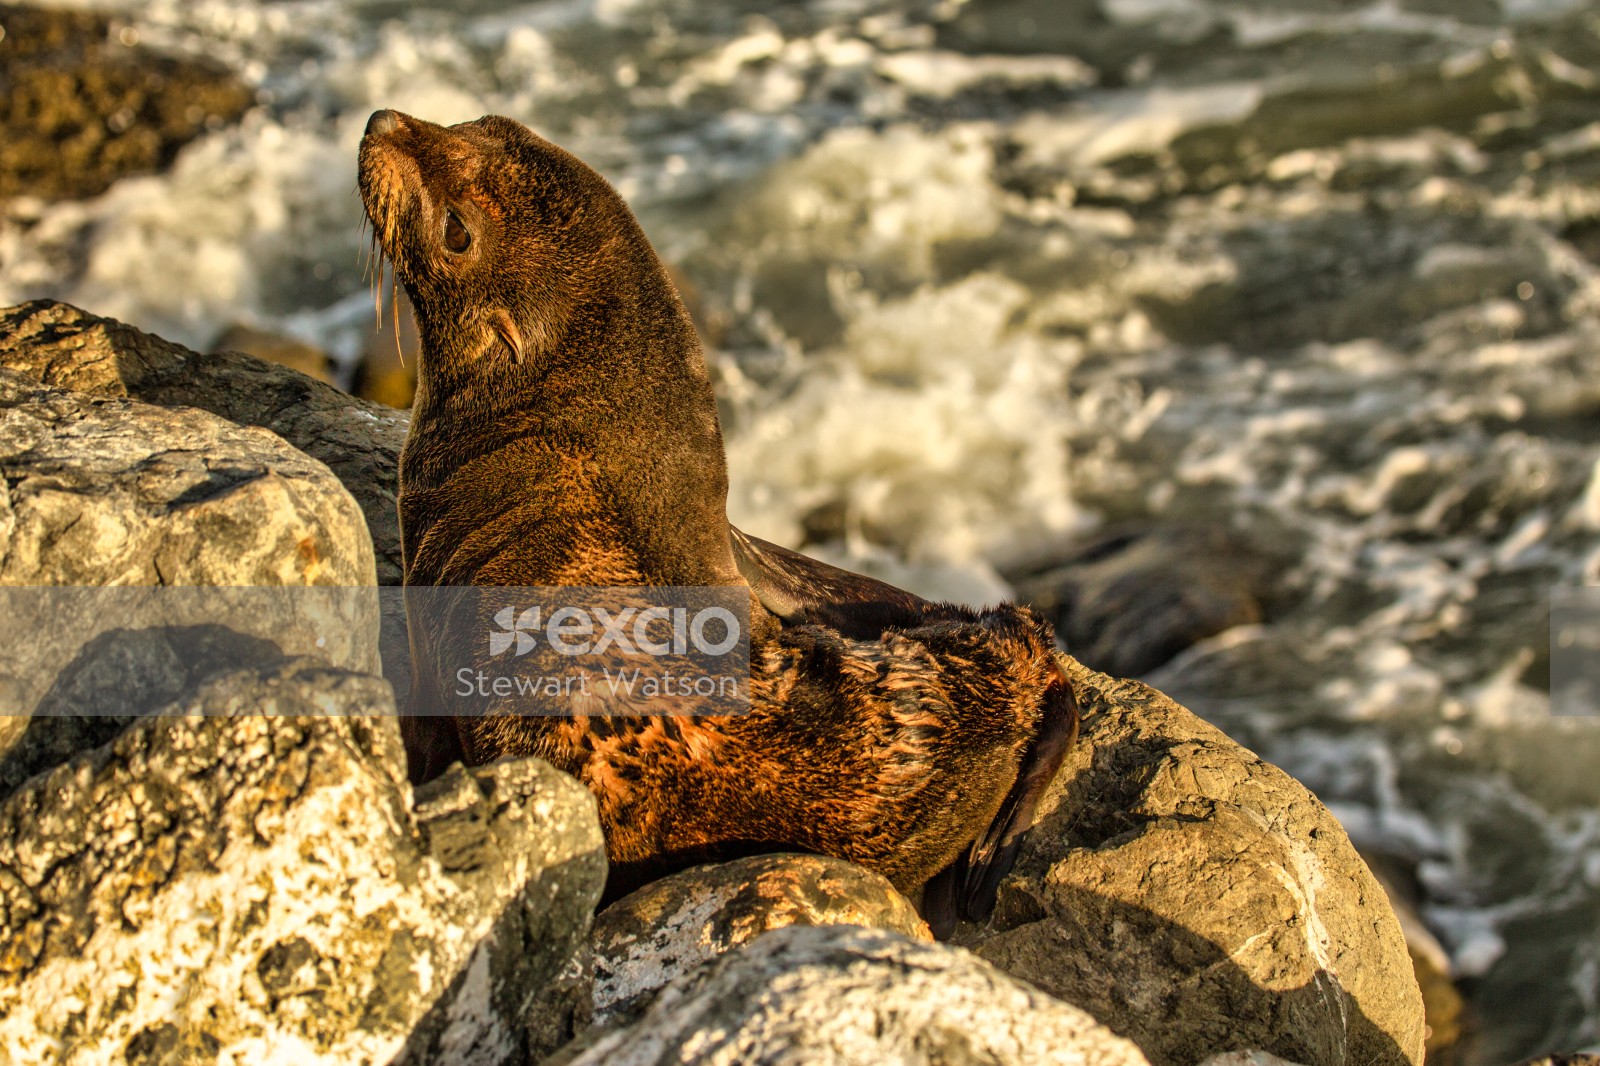 Baby fur seal on the rocks